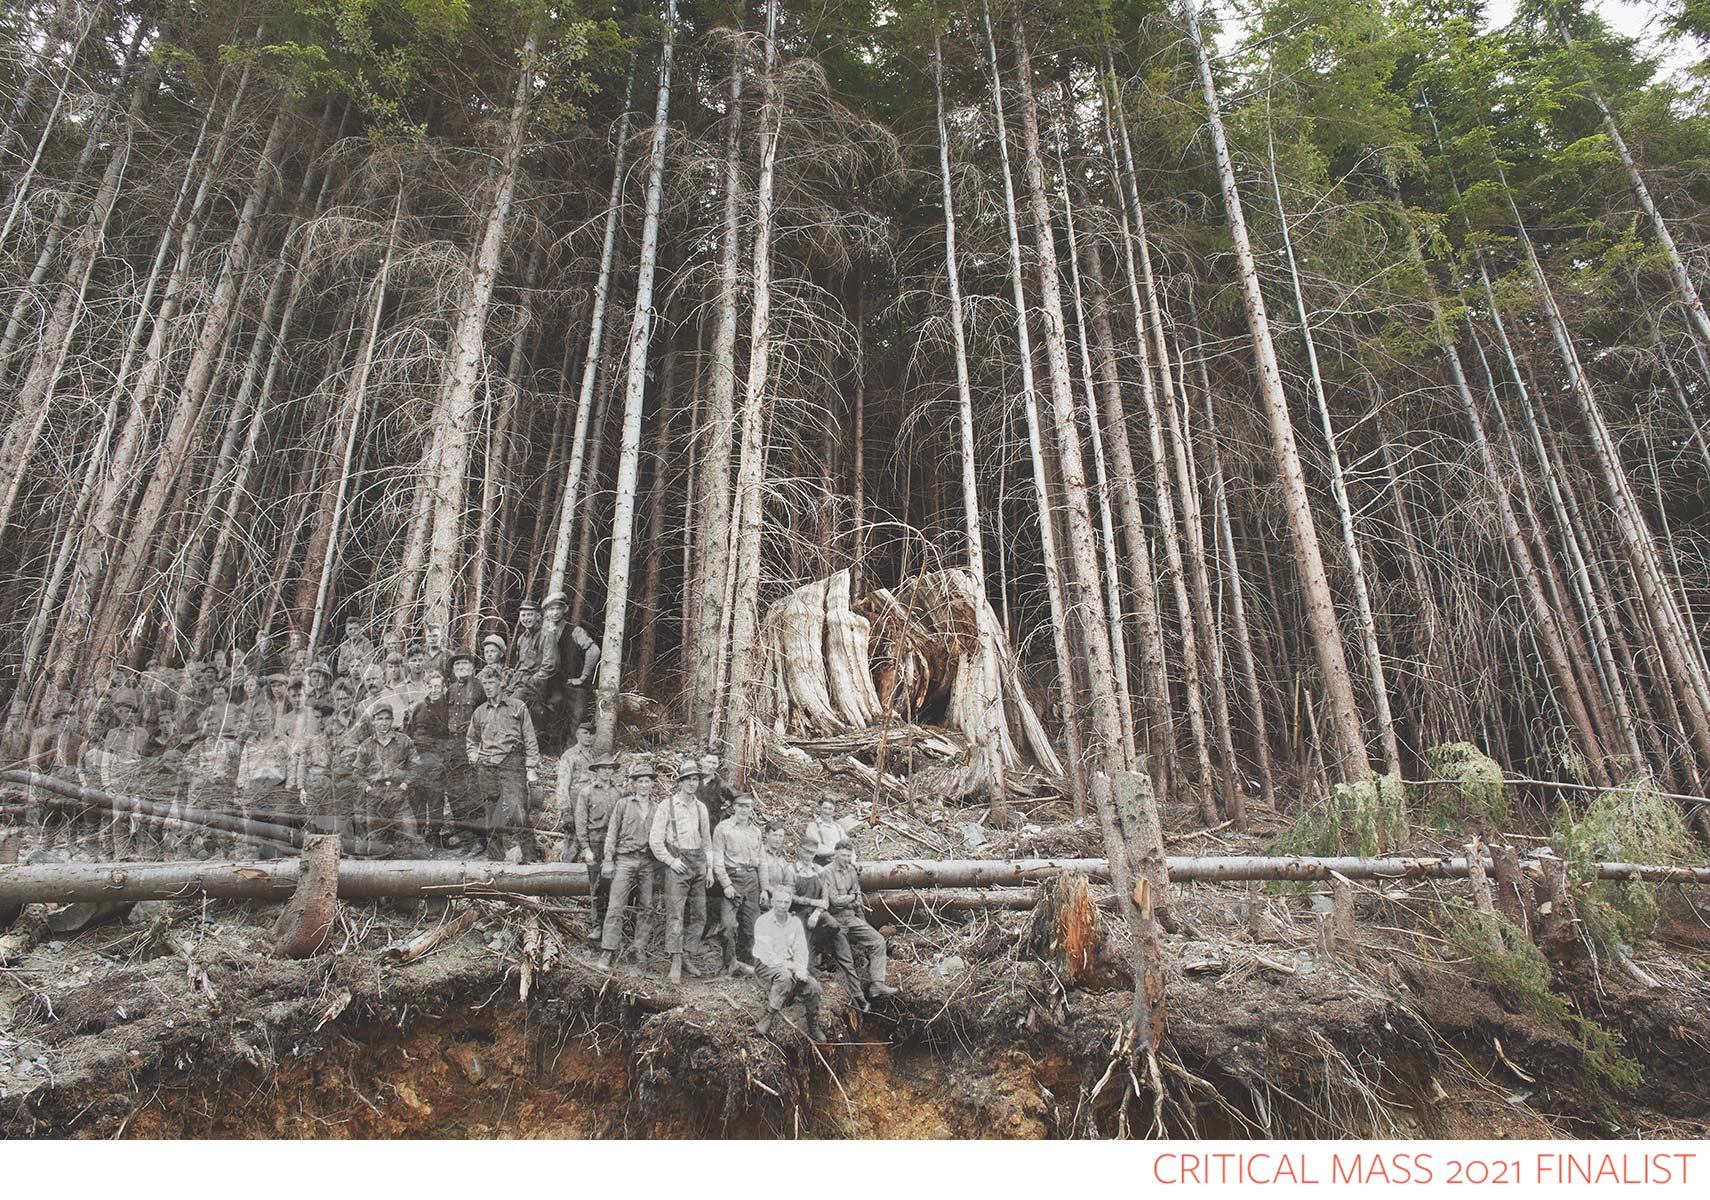 fine art photograph about logging by david ellingsen critical mass 2021 finalist top 200